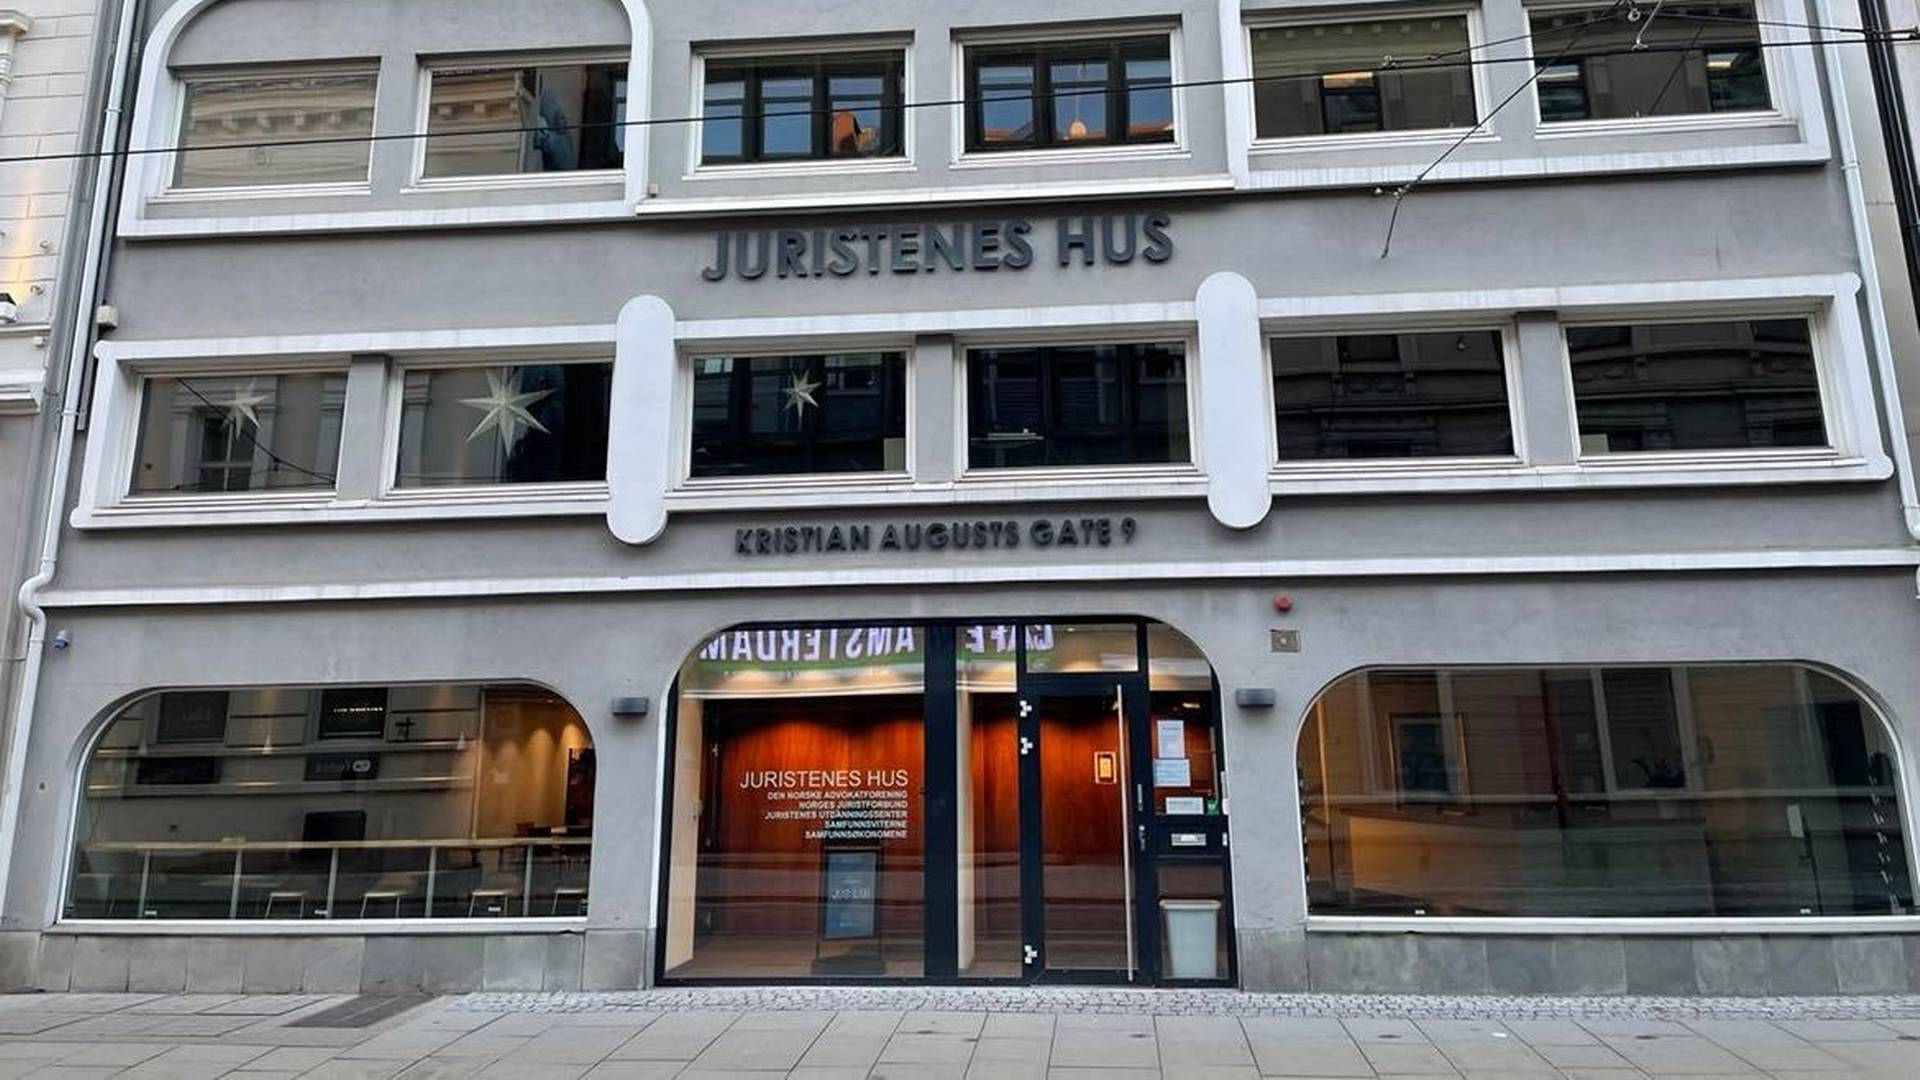 HOVEDKONTOR: Juristforbundet, som står bak Juristdagen, har hovedkontor i Kristian Augusts gate i Oslo. | Foto: Stian Olsen/AdvokatWatch